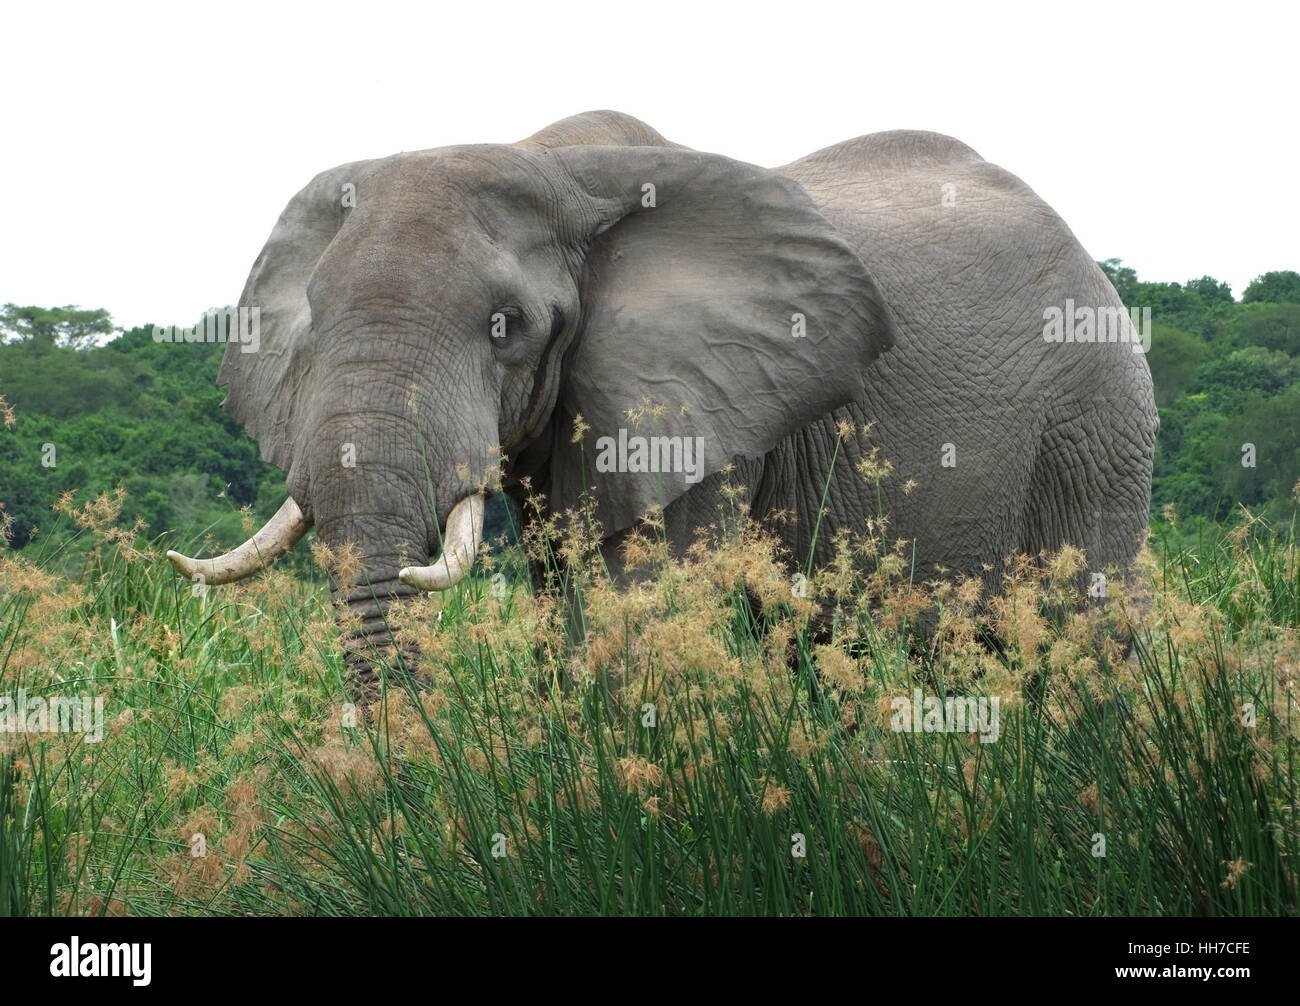 a elephant in Uganda (Africa) Stock Photo